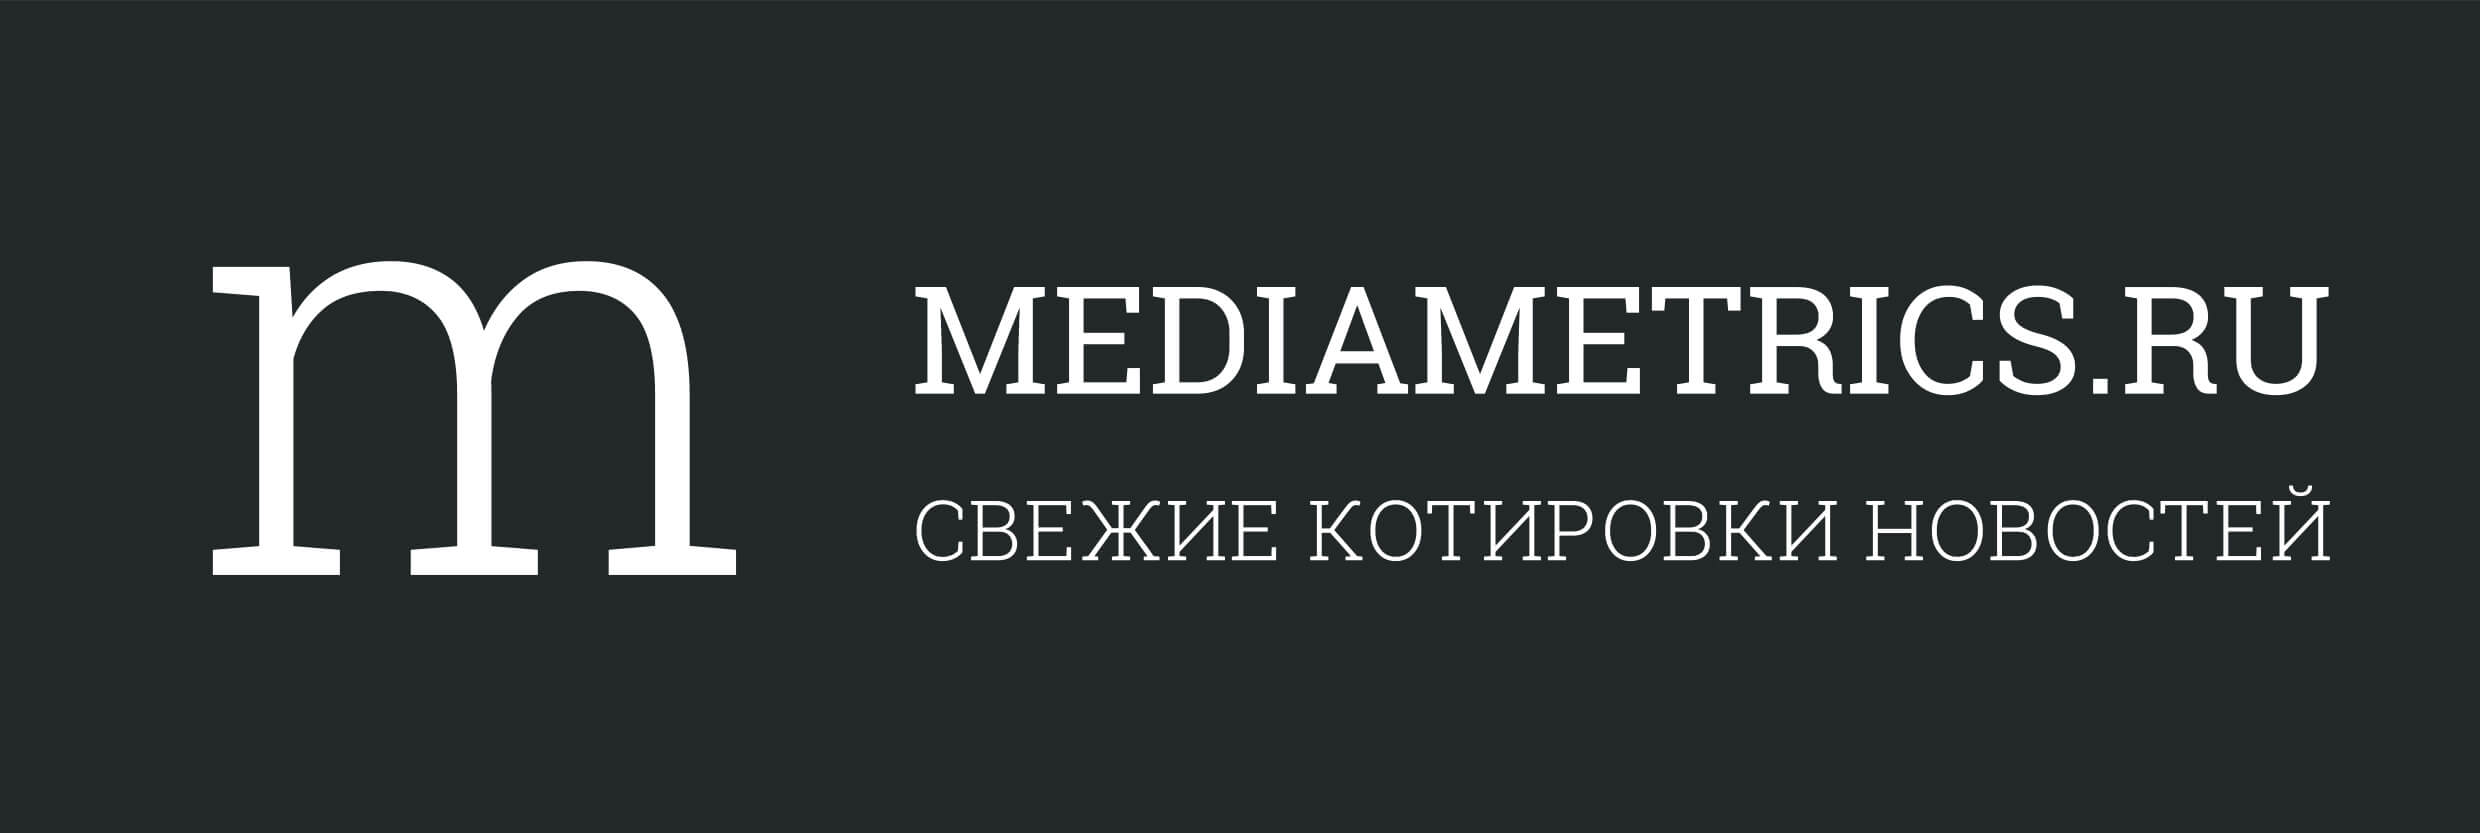 Mediametrics ru россия. Медиаметрикс. Mediametrics логотип. Радио mediametrics. Радио Медиаметрикс лого.